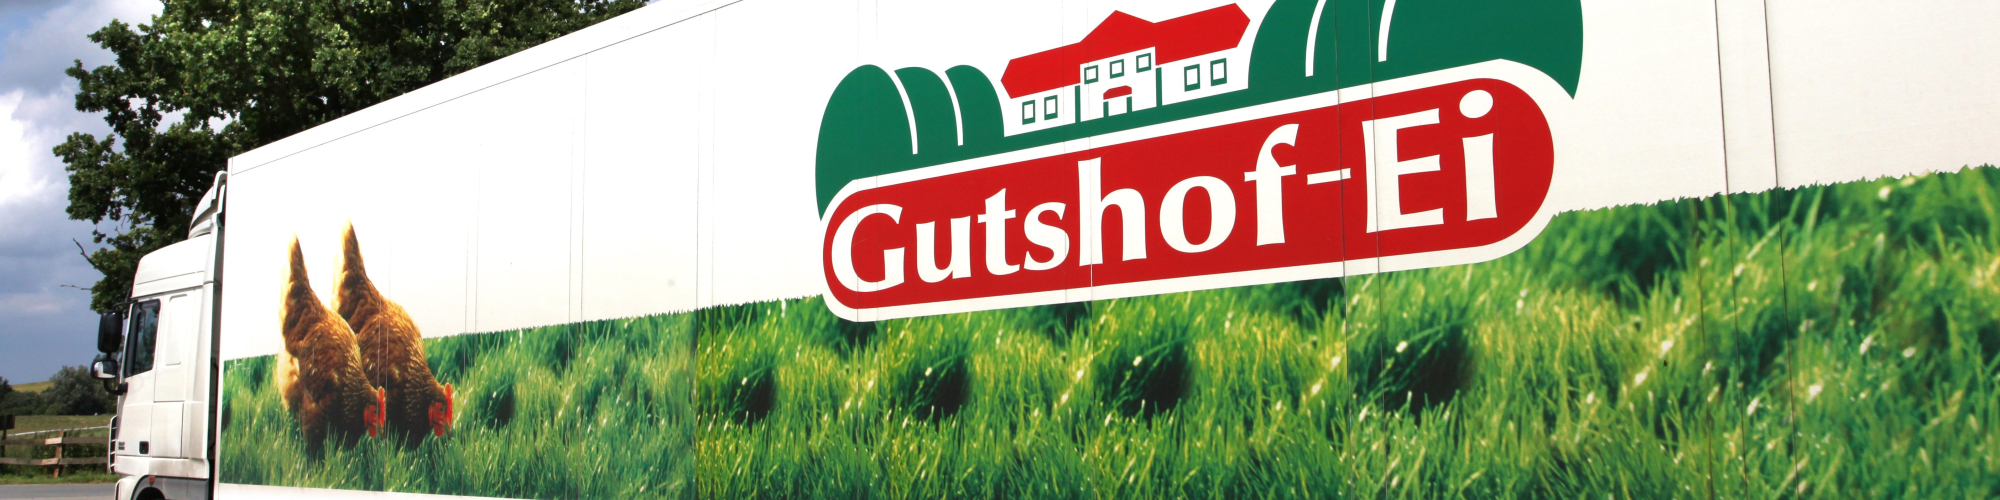 Gutshof-Ei GmbH